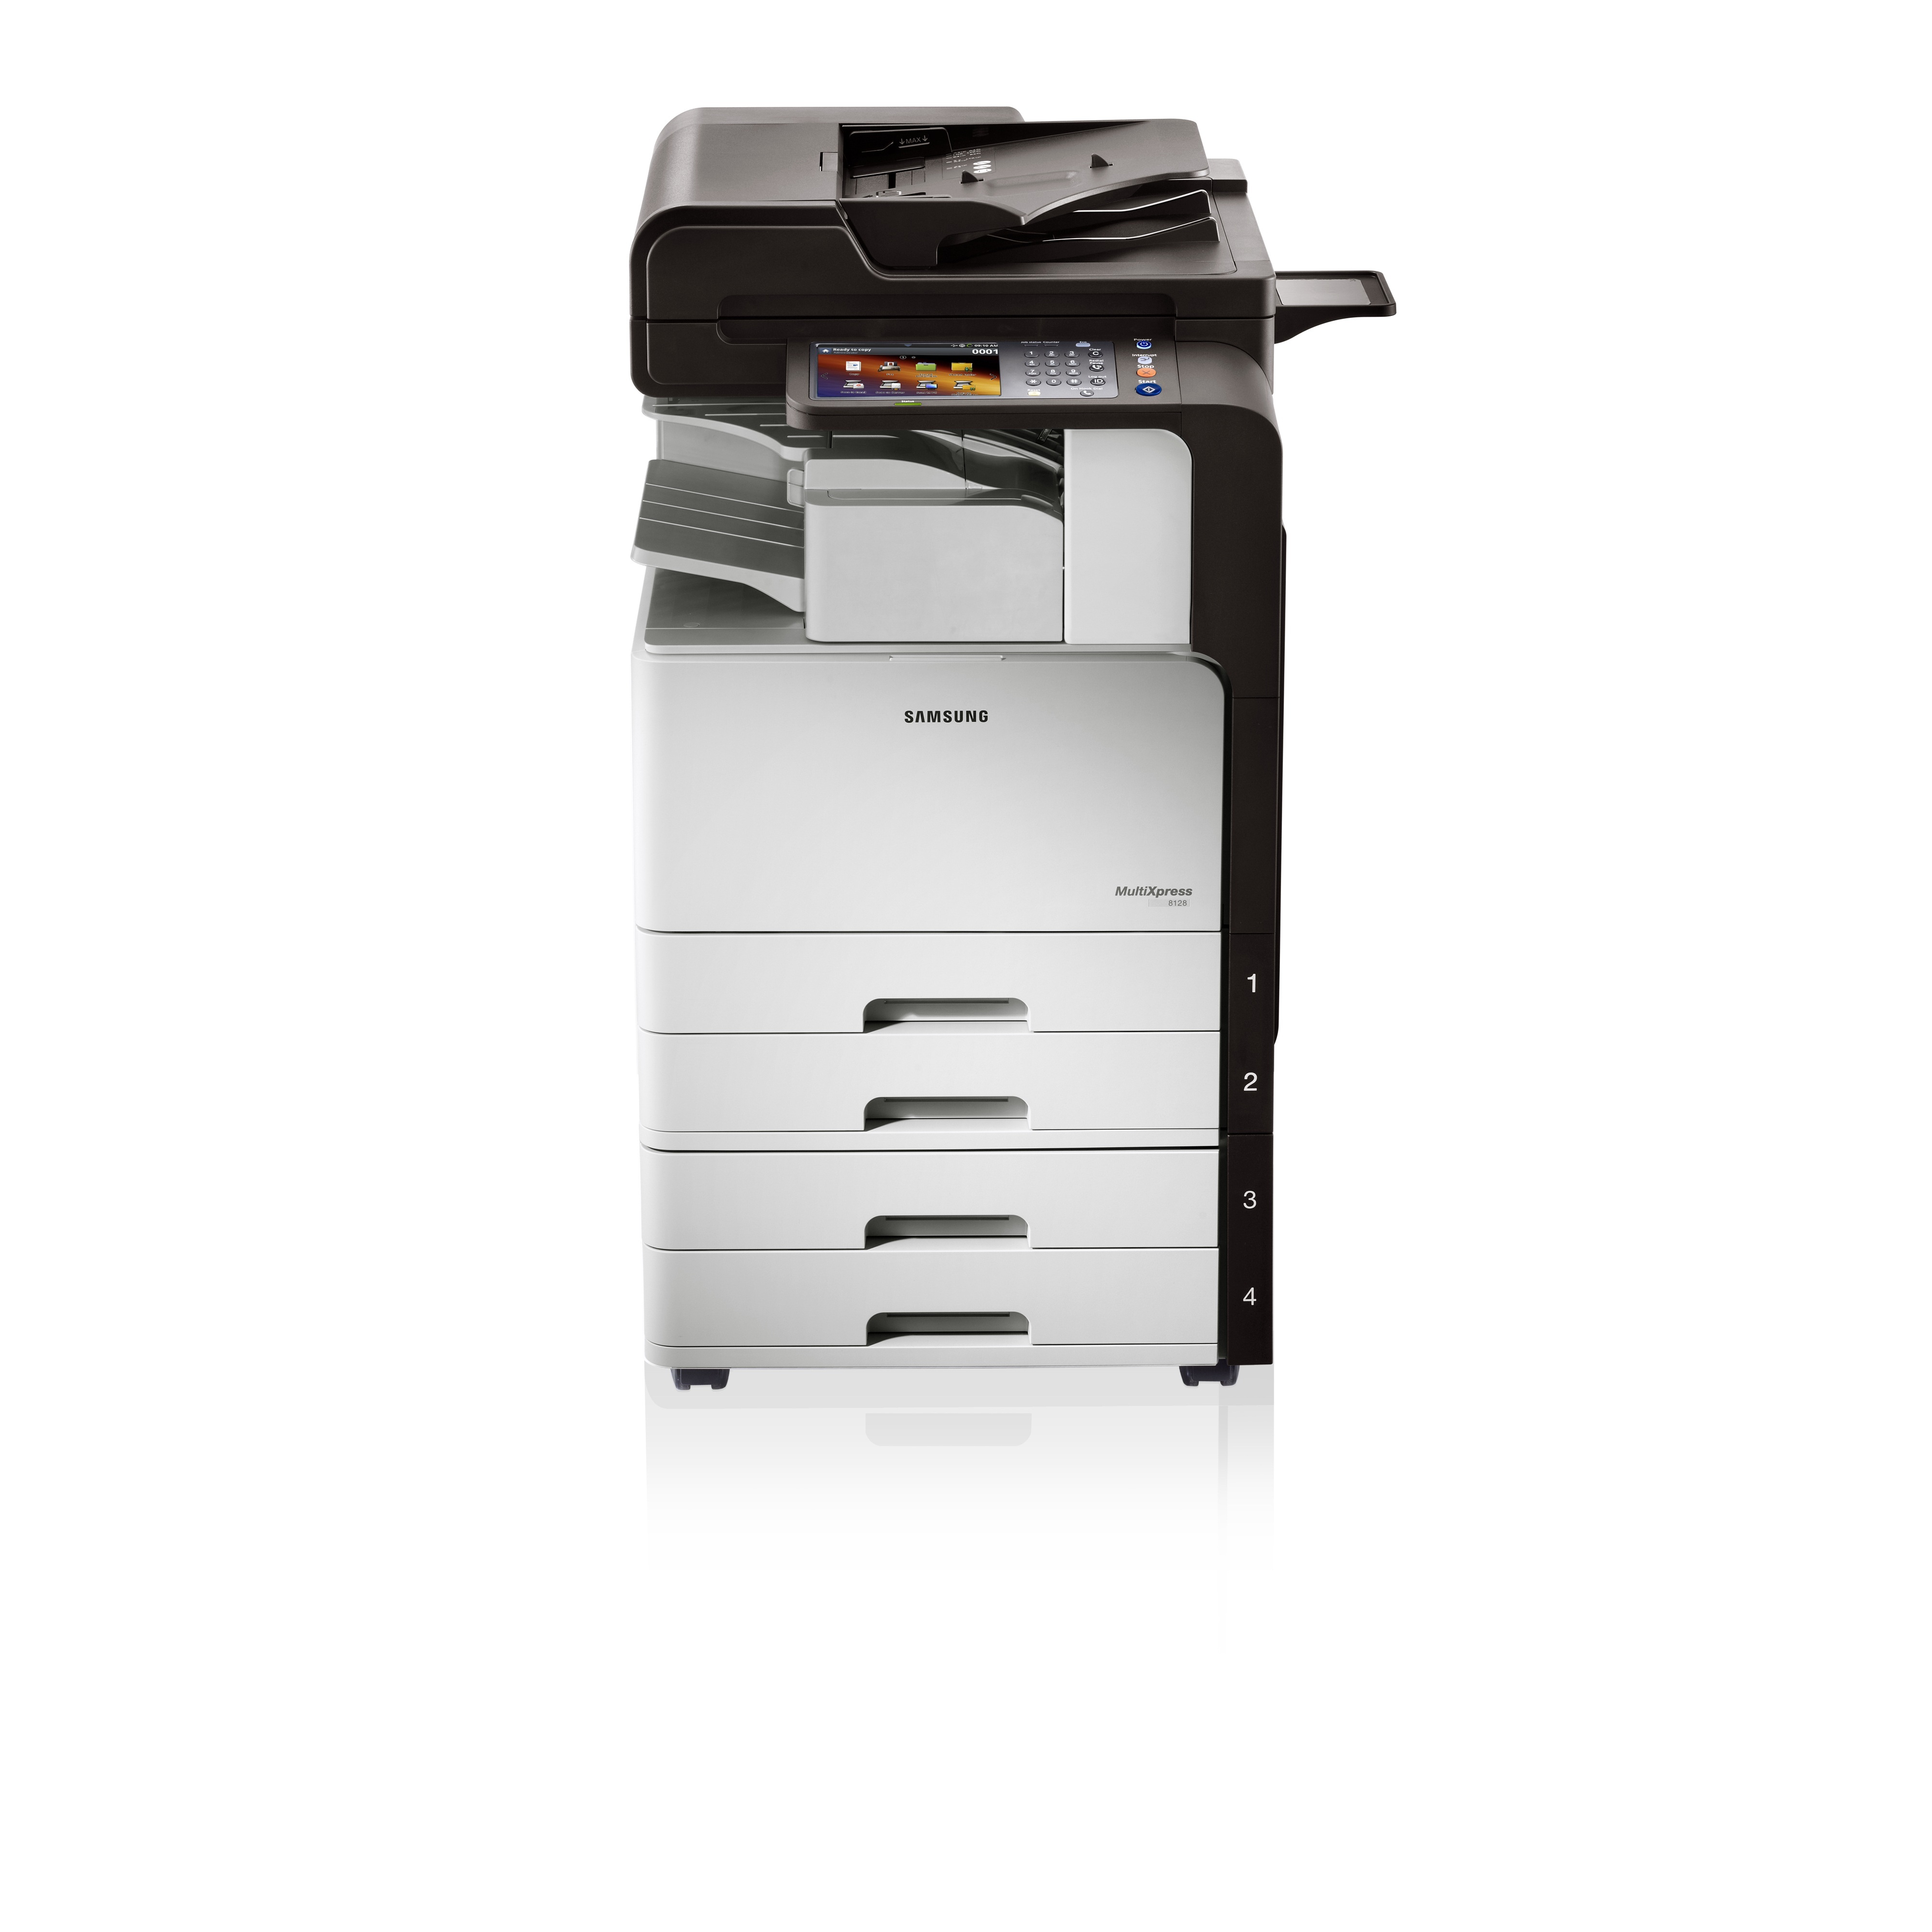 Samsung MultiXpress SCX-8128 Laser Multifunction Printer series